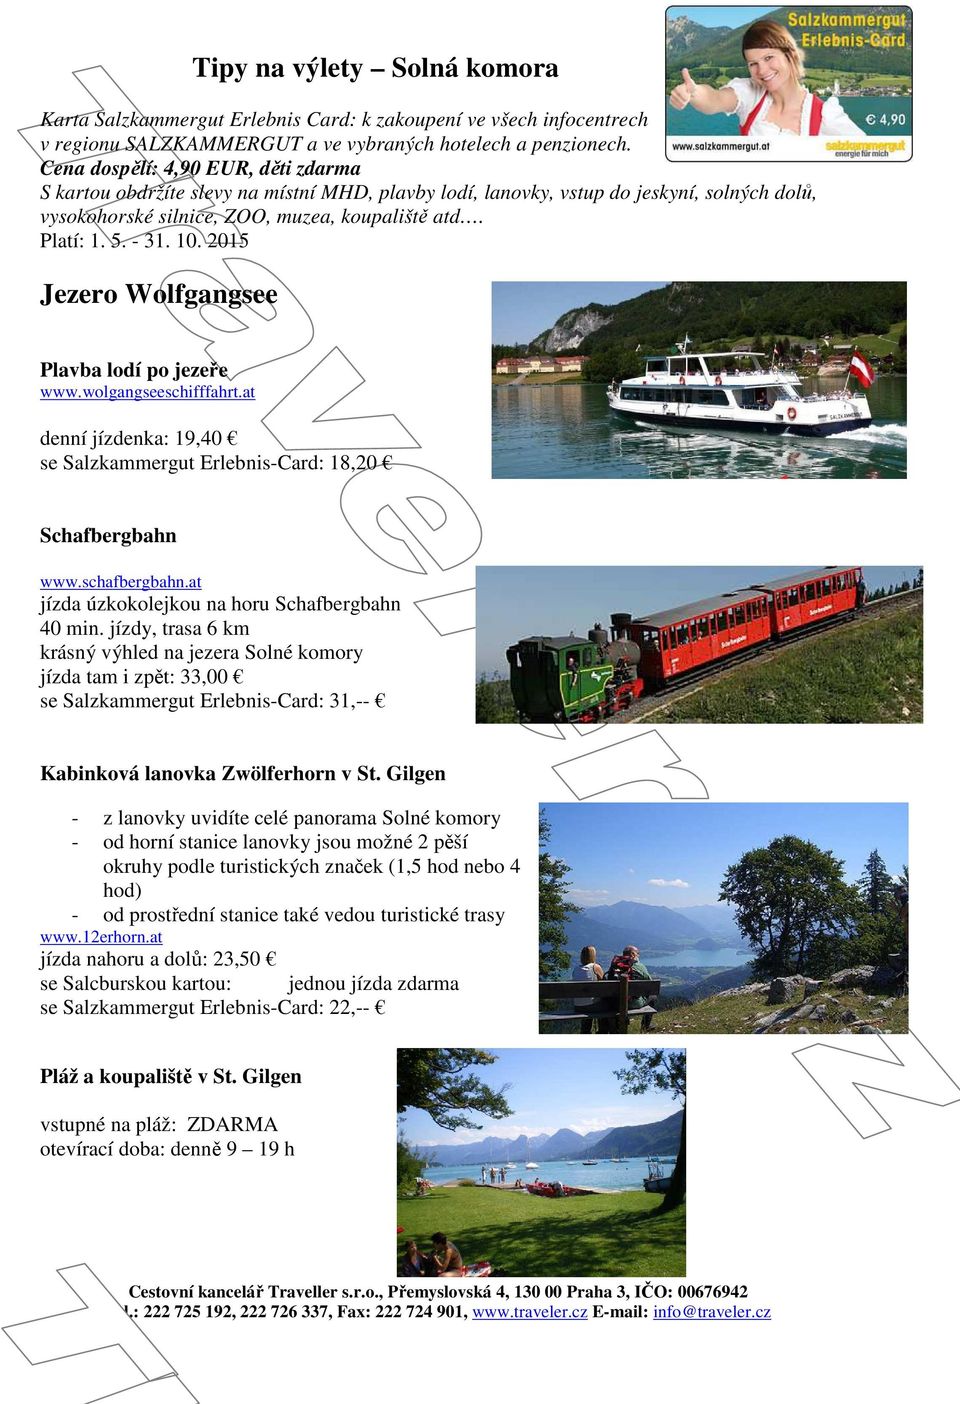 10. 2015 Jezero Wolfgangsee Plavba lodí po jezeře www.wolgangseeschifffahrt.at denní jízdenka: 19,40 se Salzkammergut Erlebnis-Card: 18,20 Schafbergbahn www.schafbergbahn.